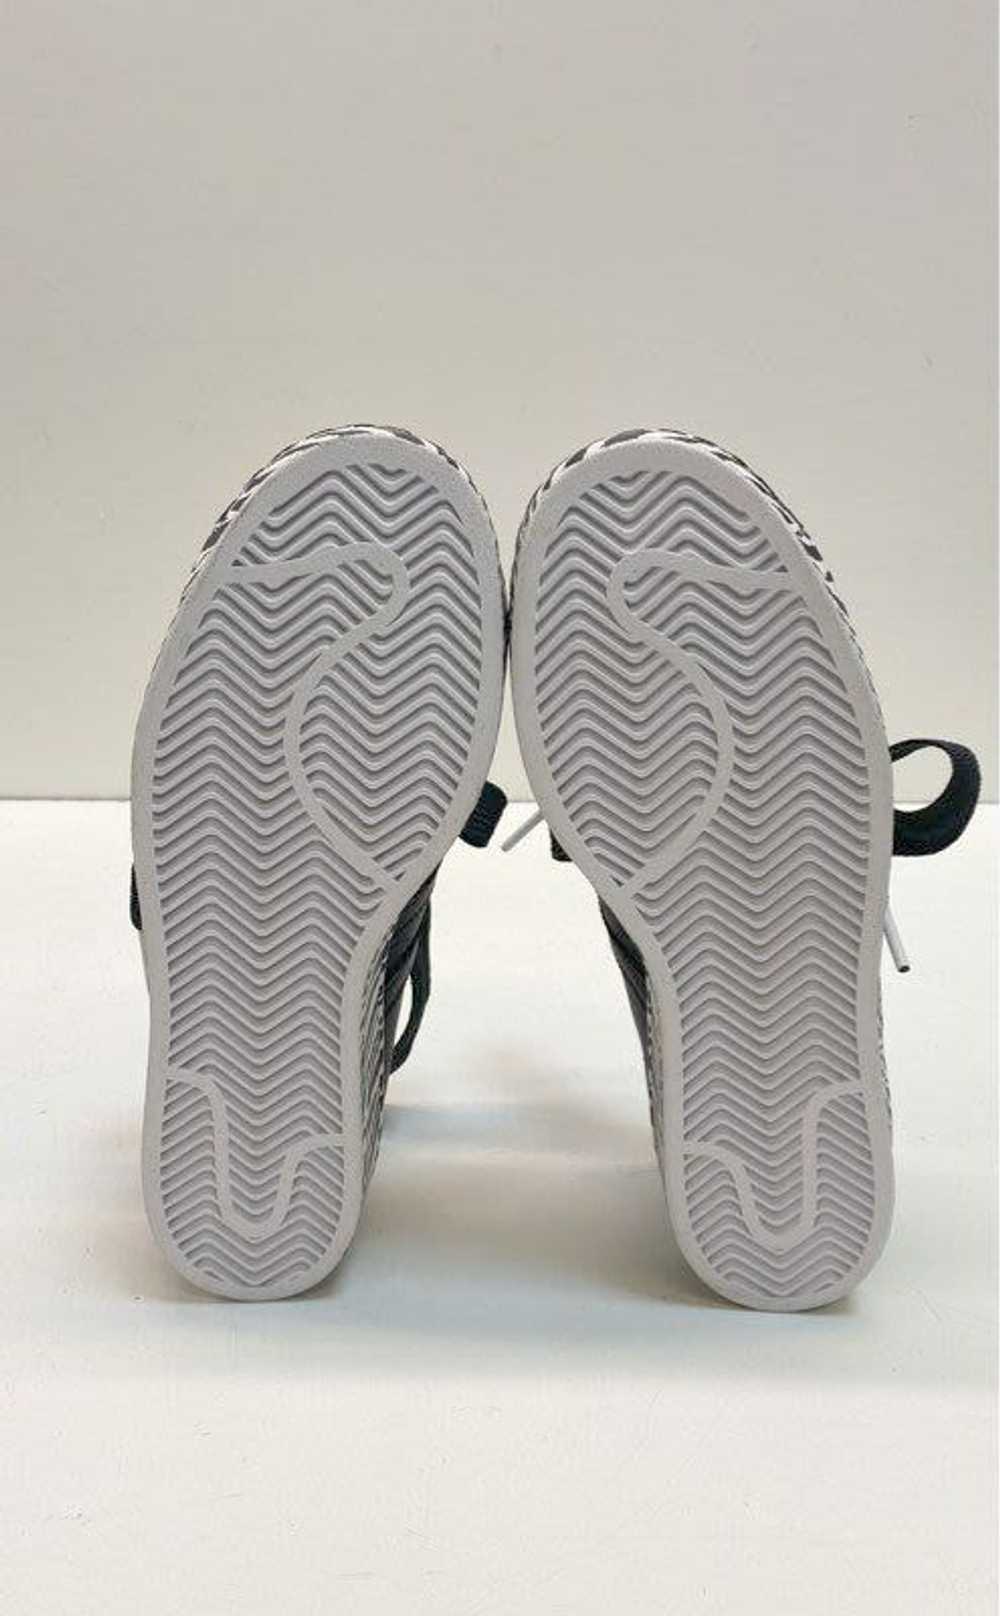 Adidas Leather Superstar Zebra Print Sneakers Bla… - image 6